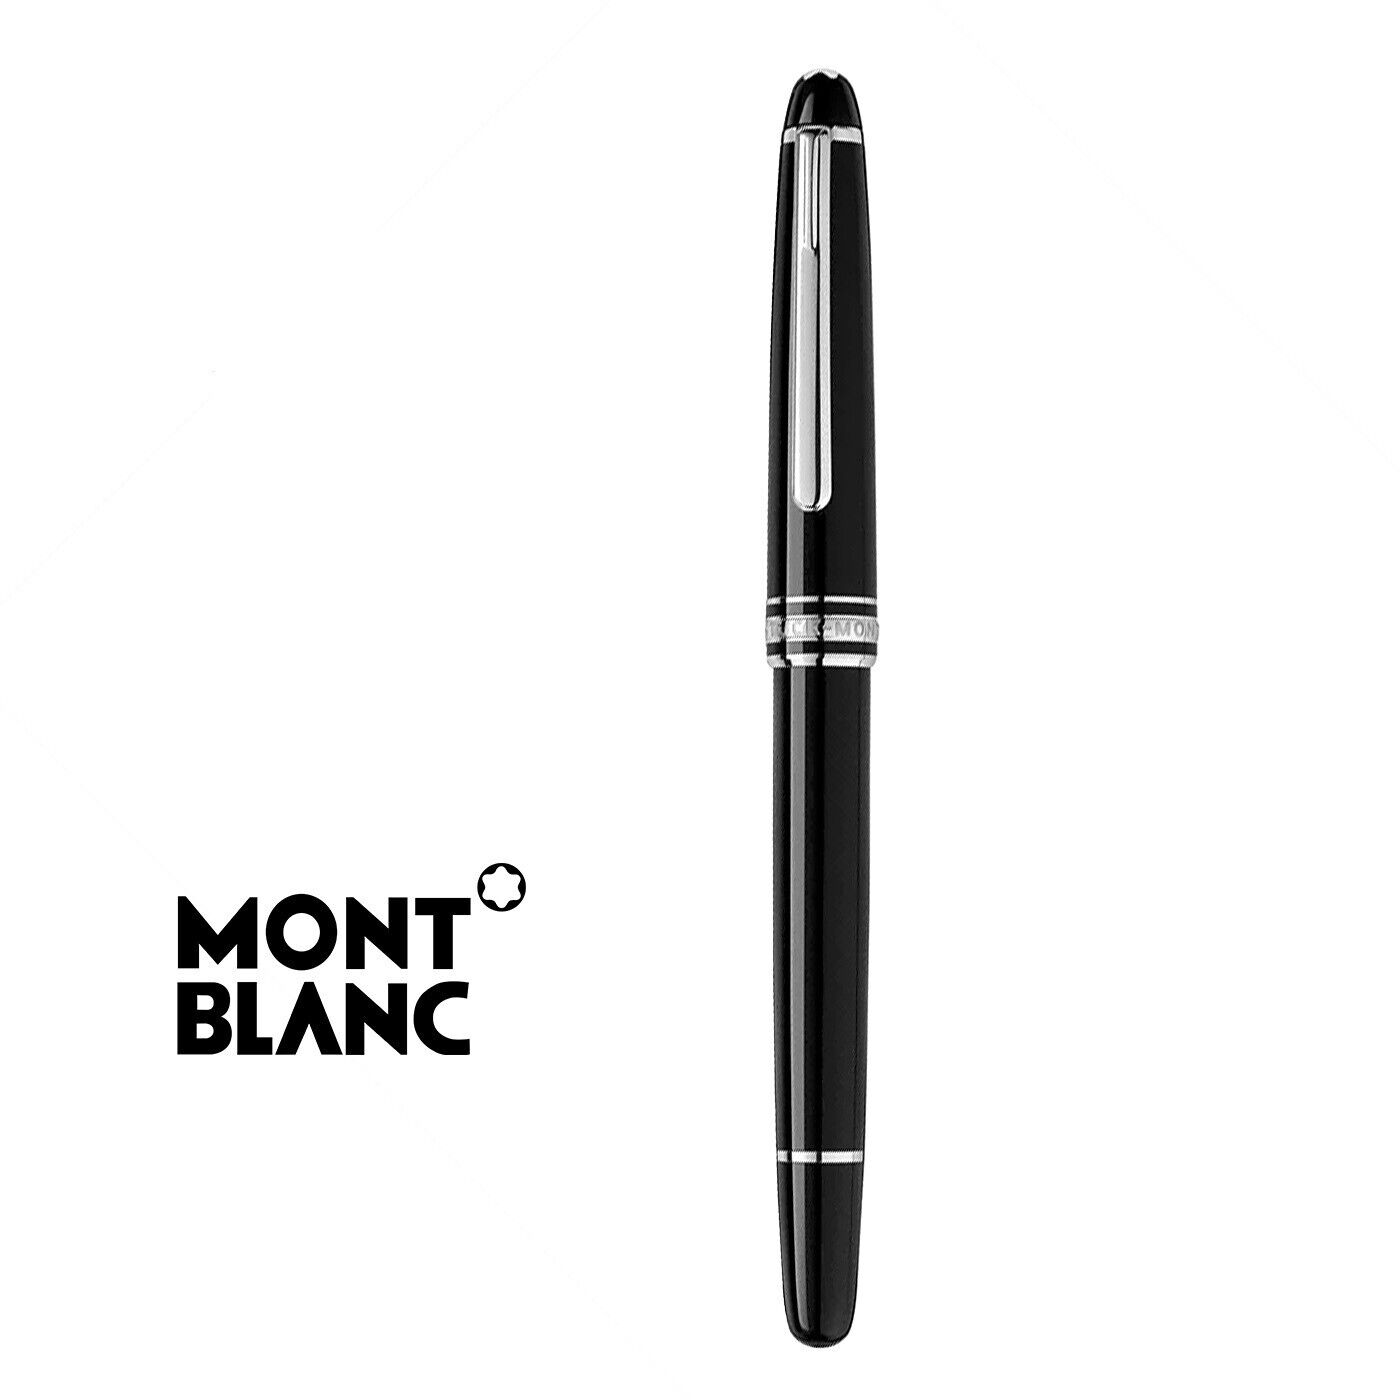  Montblanc  Meisterstuck Classique Platinum Rollerball  Pen Flash Sale